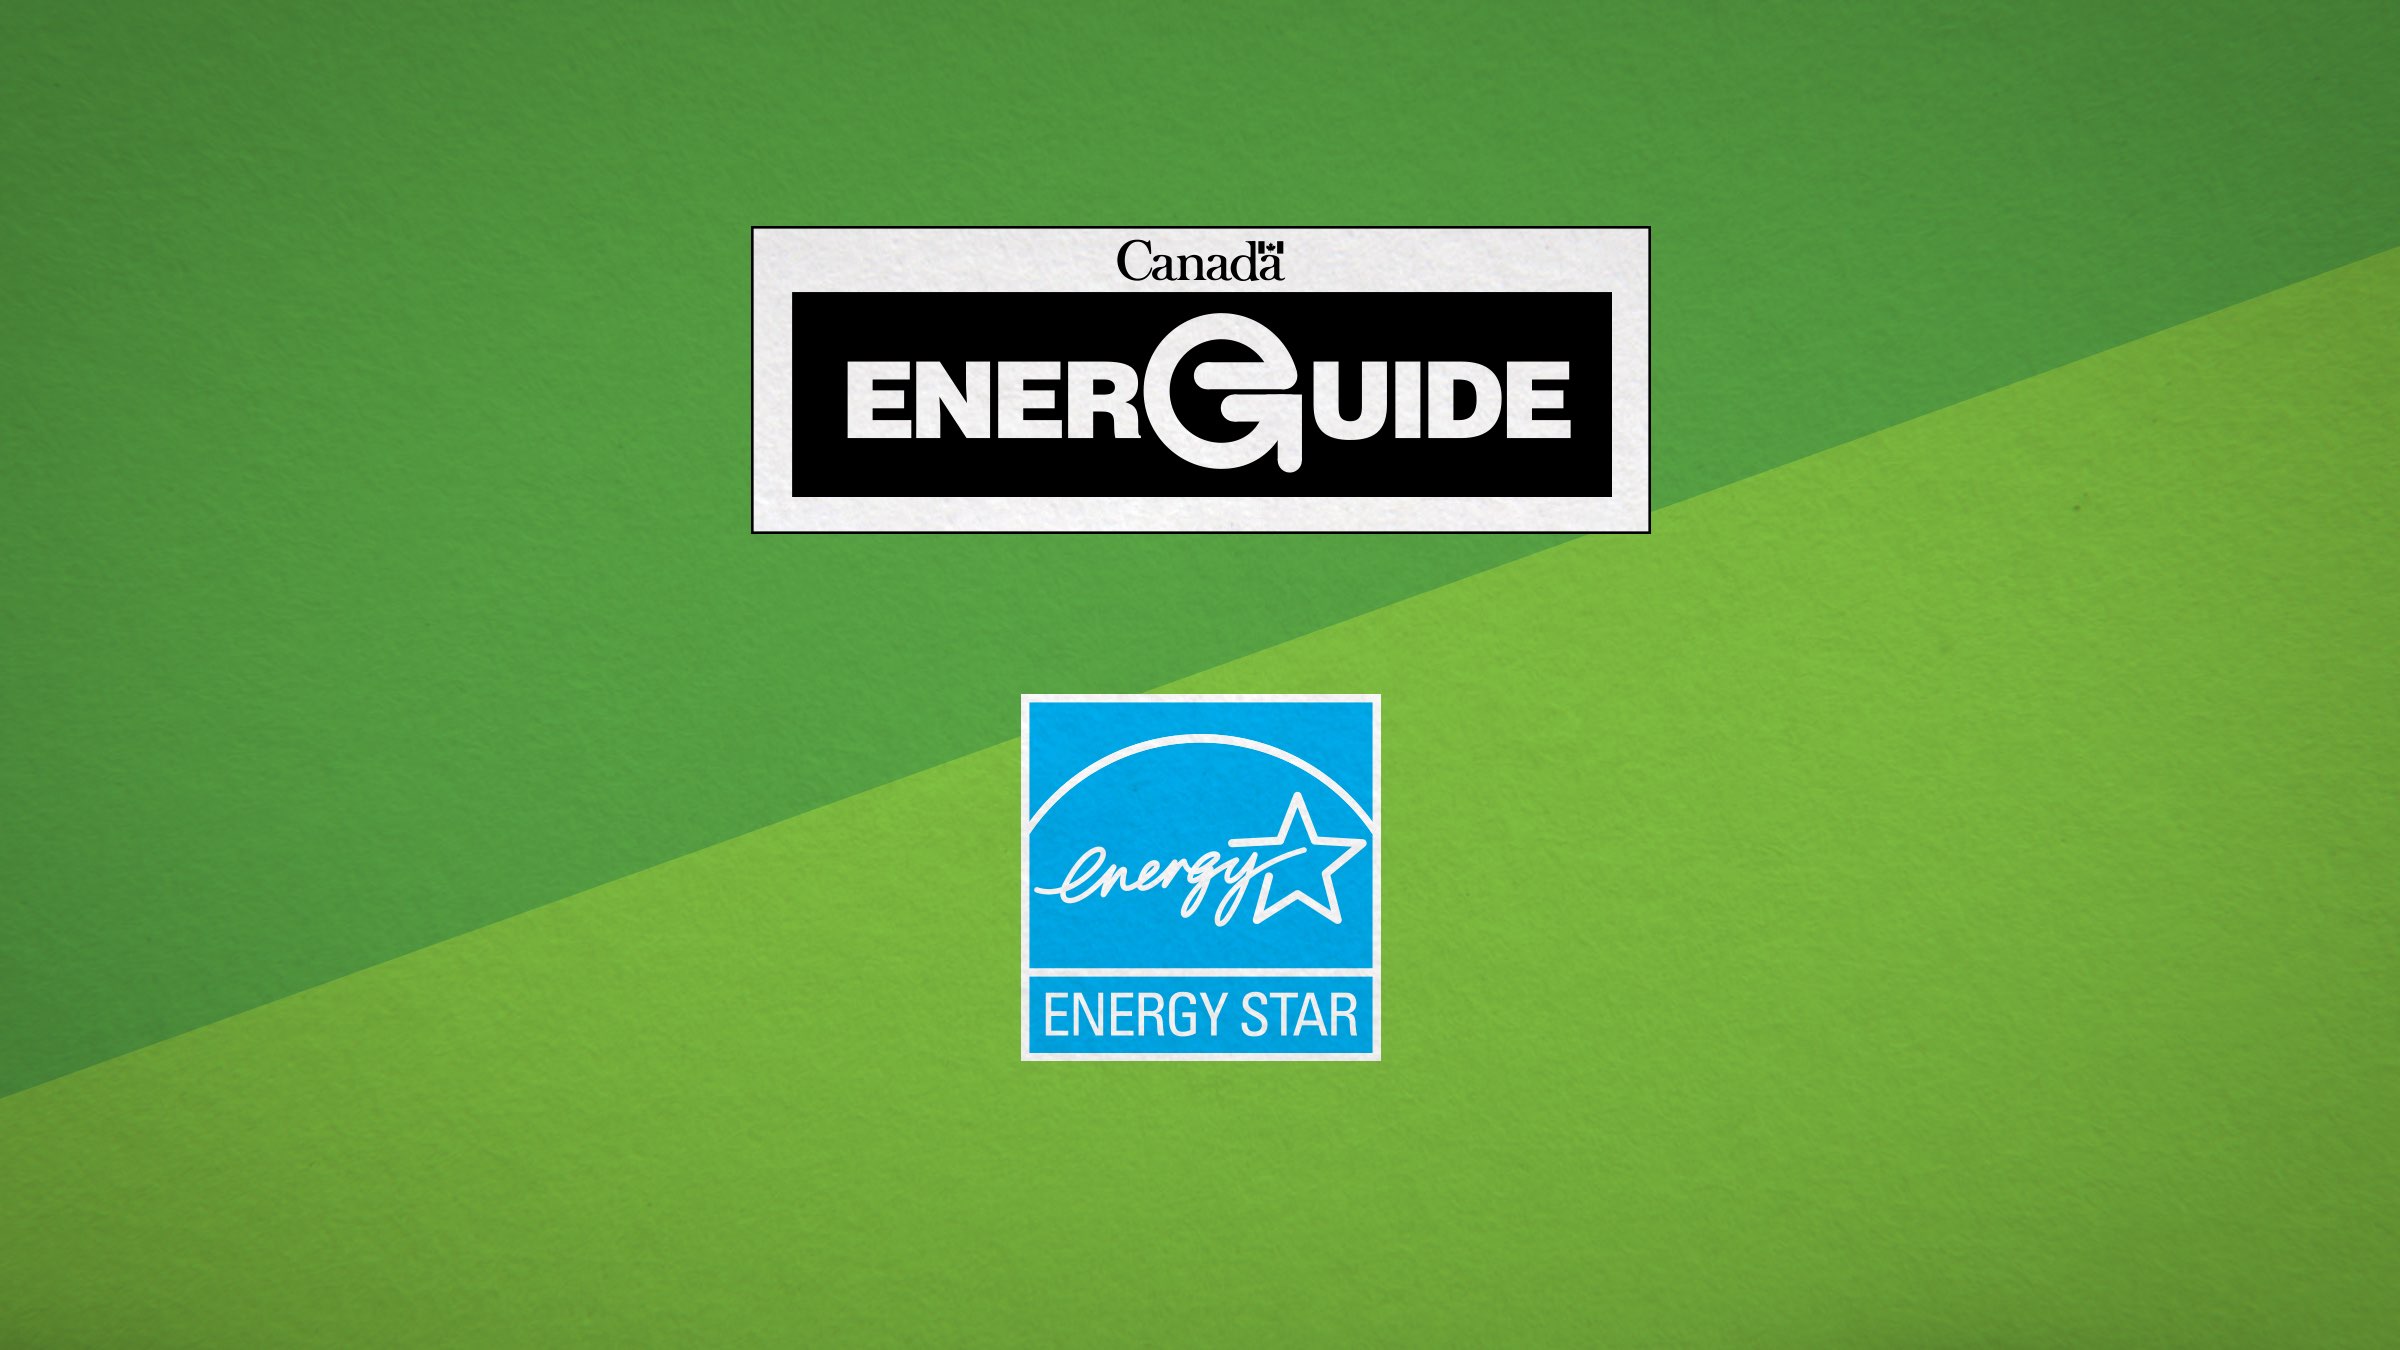 EnerGuide and Energy Star logos